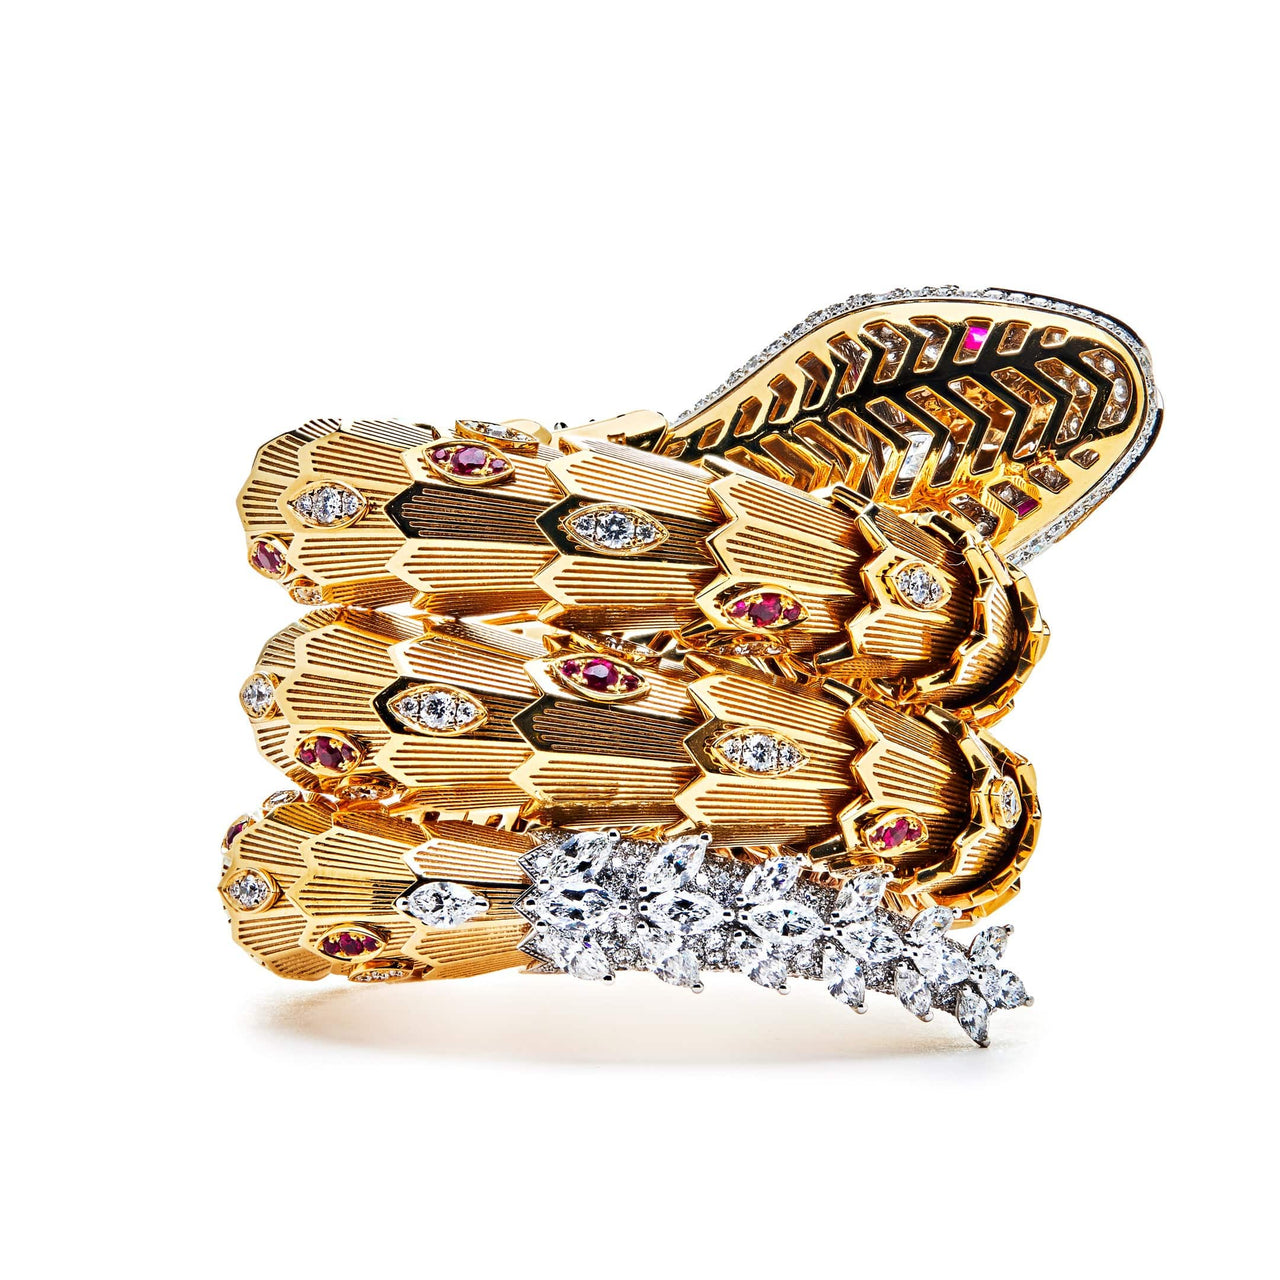 Bracelets Bvlgari Serpenti Yellow and White Gold Bangle Bracelet 260562 Wrist Aficionado